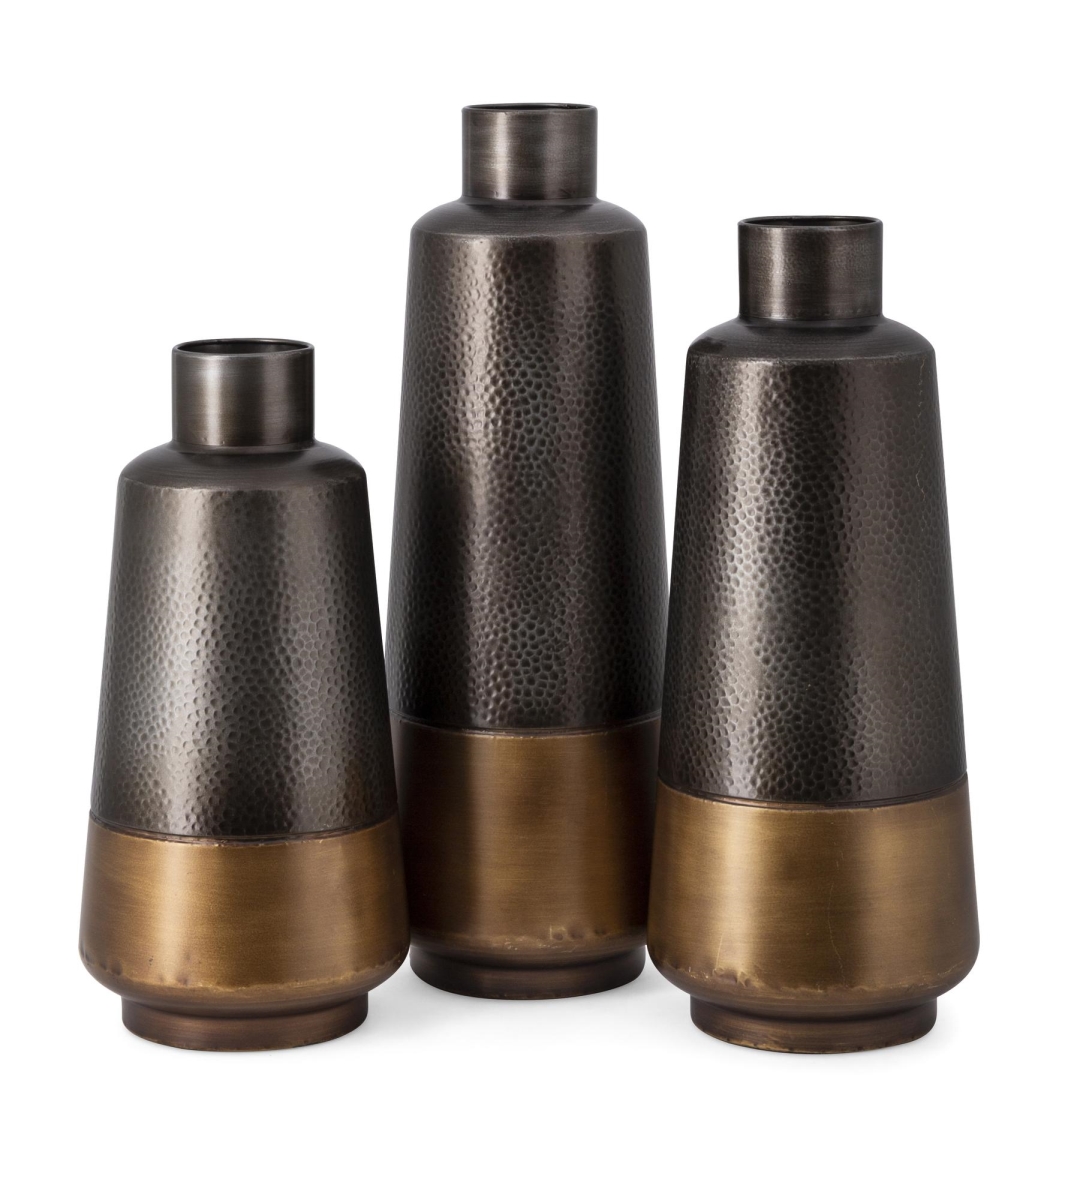 Imax 28912-3 Nelson Metal Vases - Set Of 3